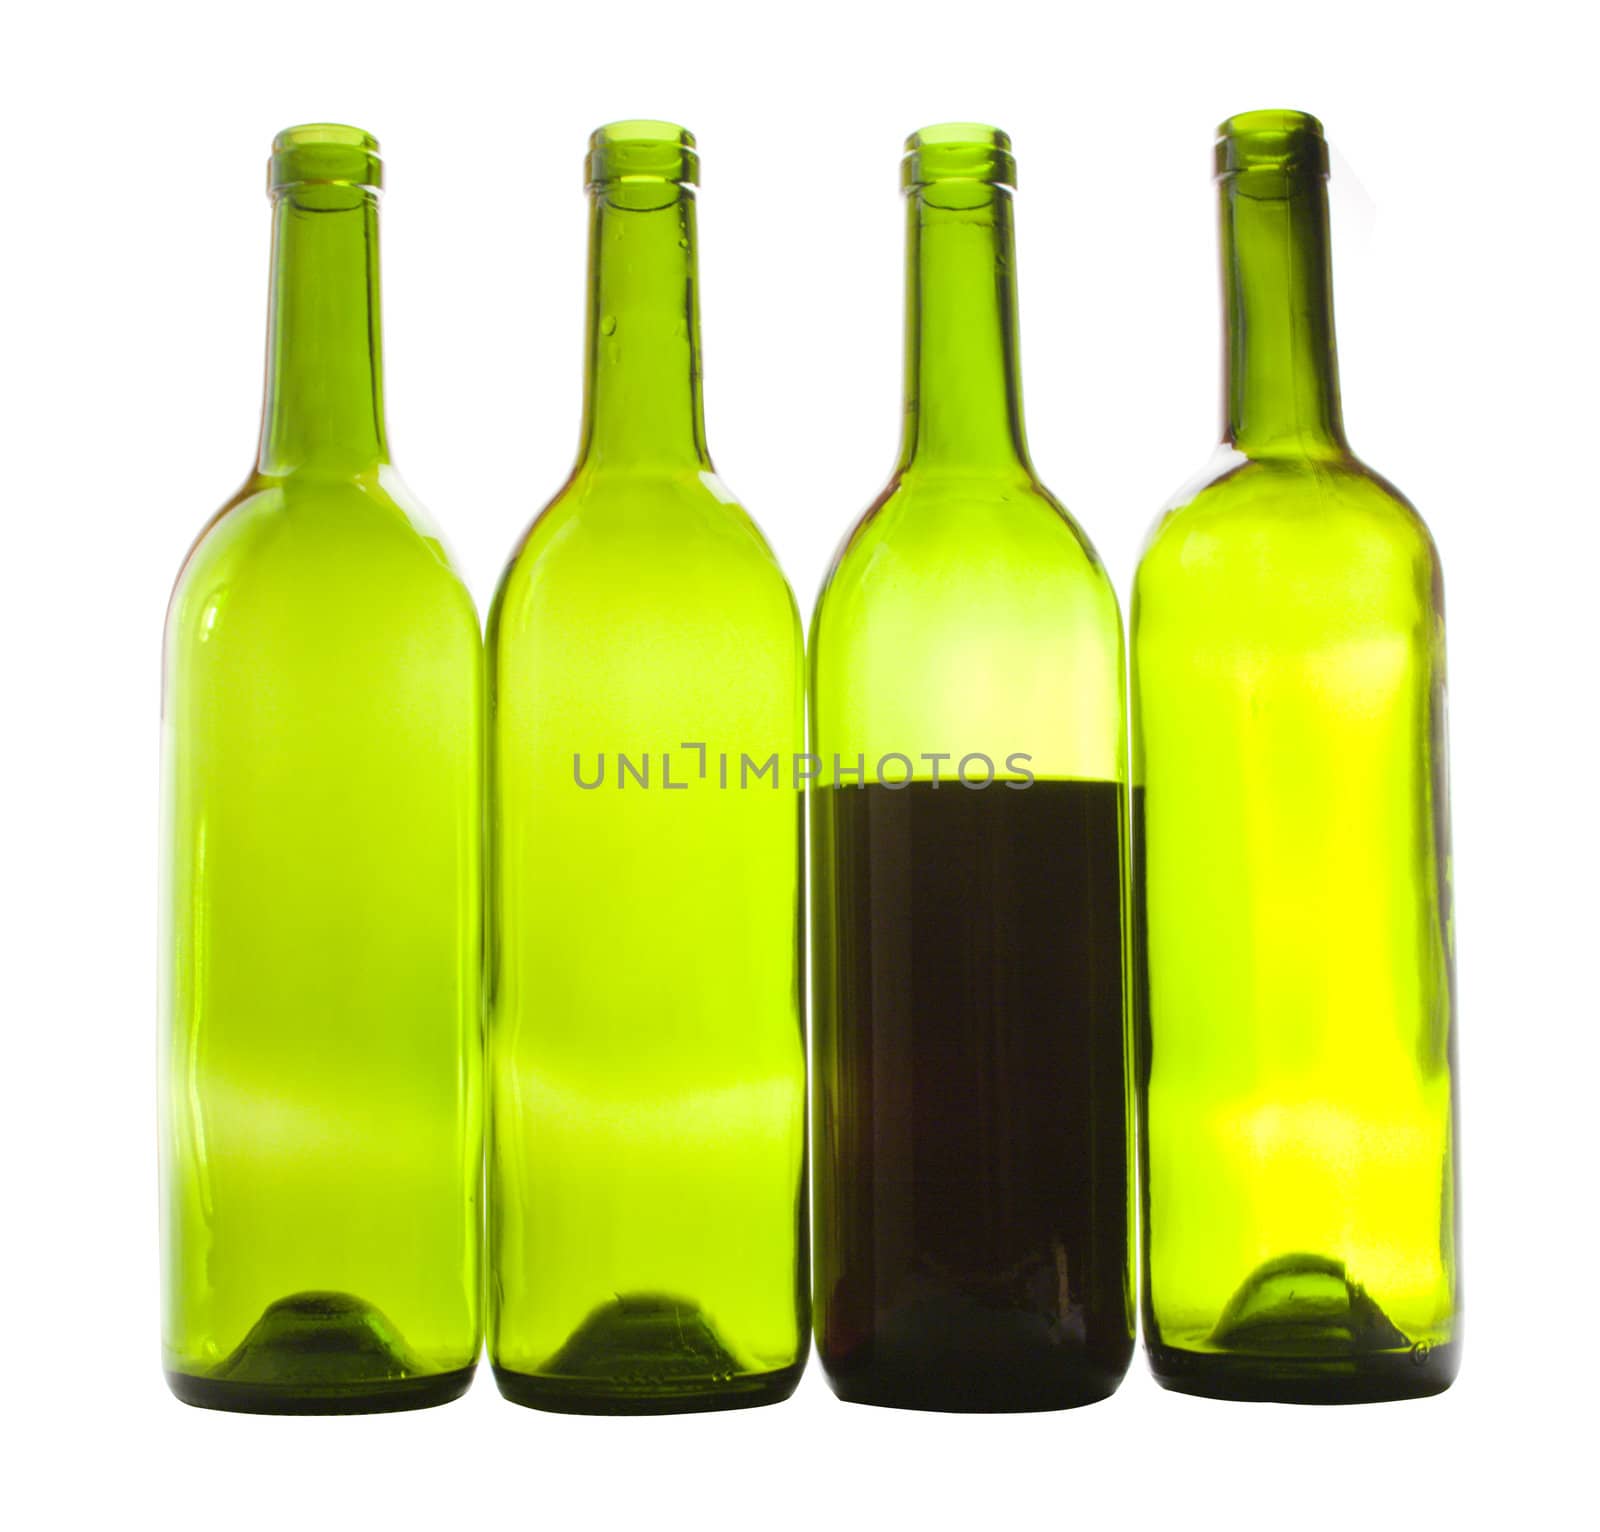 Wine bottles close-up by smoki